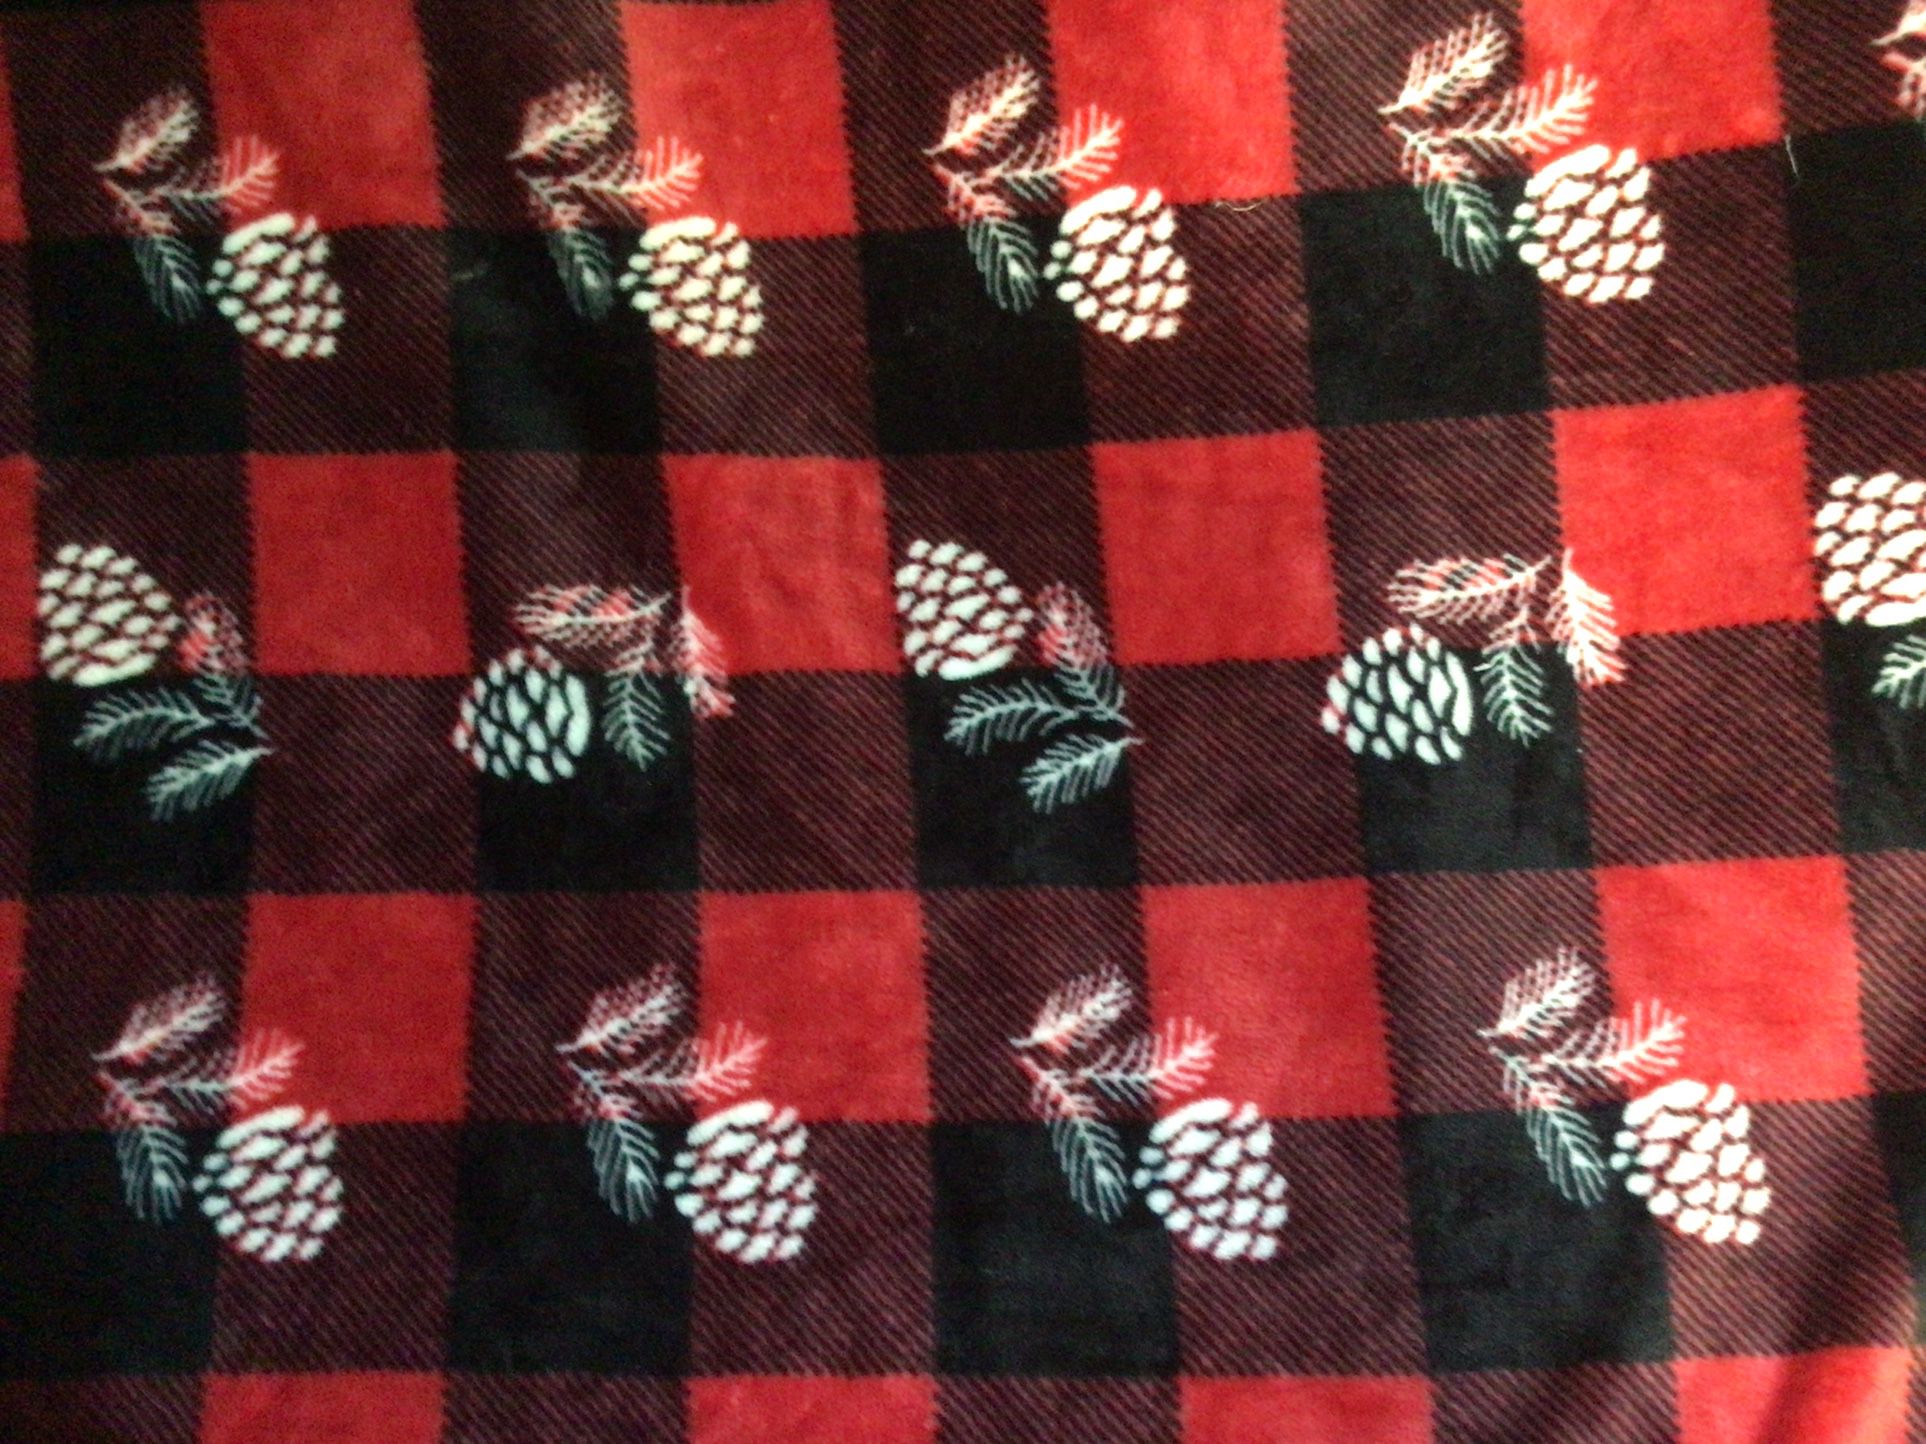 Fall Print Blanket 75”x60” Fleece REDUCED $8 